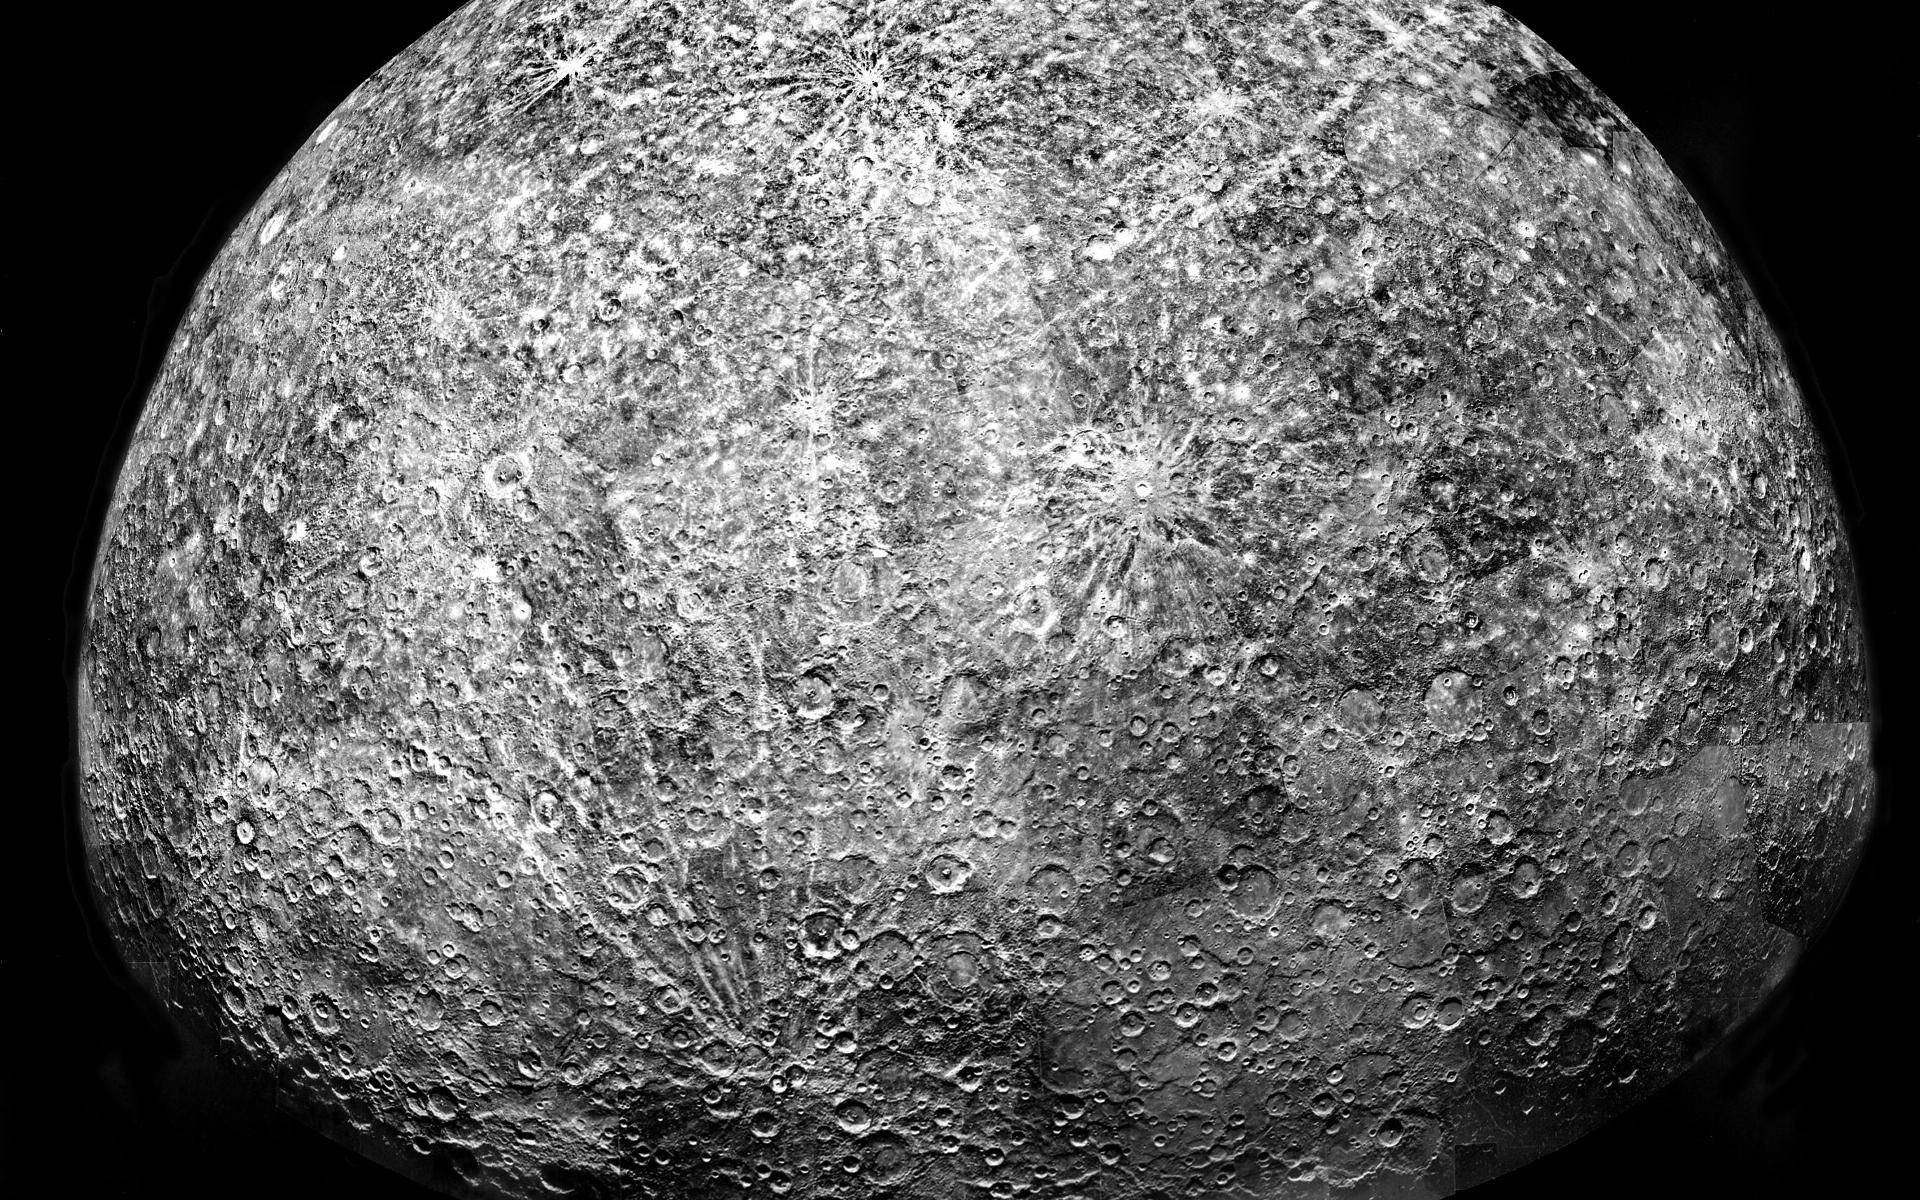 Sefragment Av Merkurius Från Jorden Som Bakgrundsbild På Datorn Eller Mobilen. Wallpaper